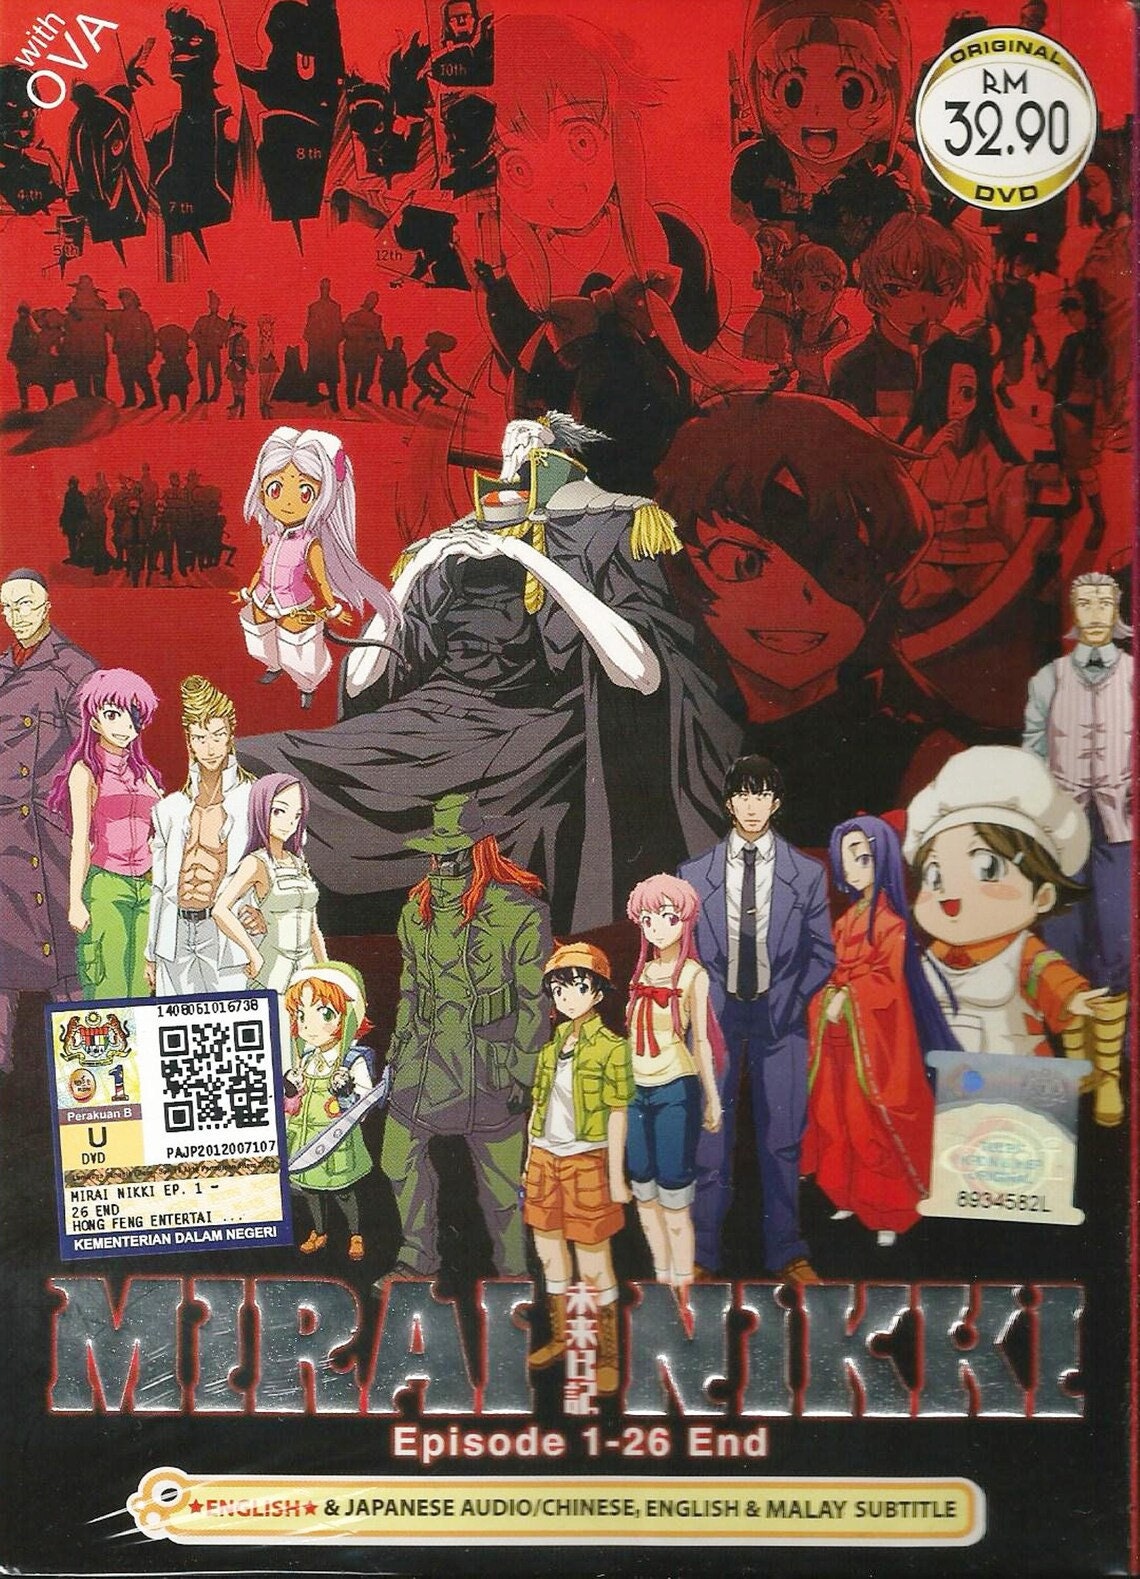 Kyoukai no Kanata Movie Posters  Anime chibi, Anime, Aesthetic anime